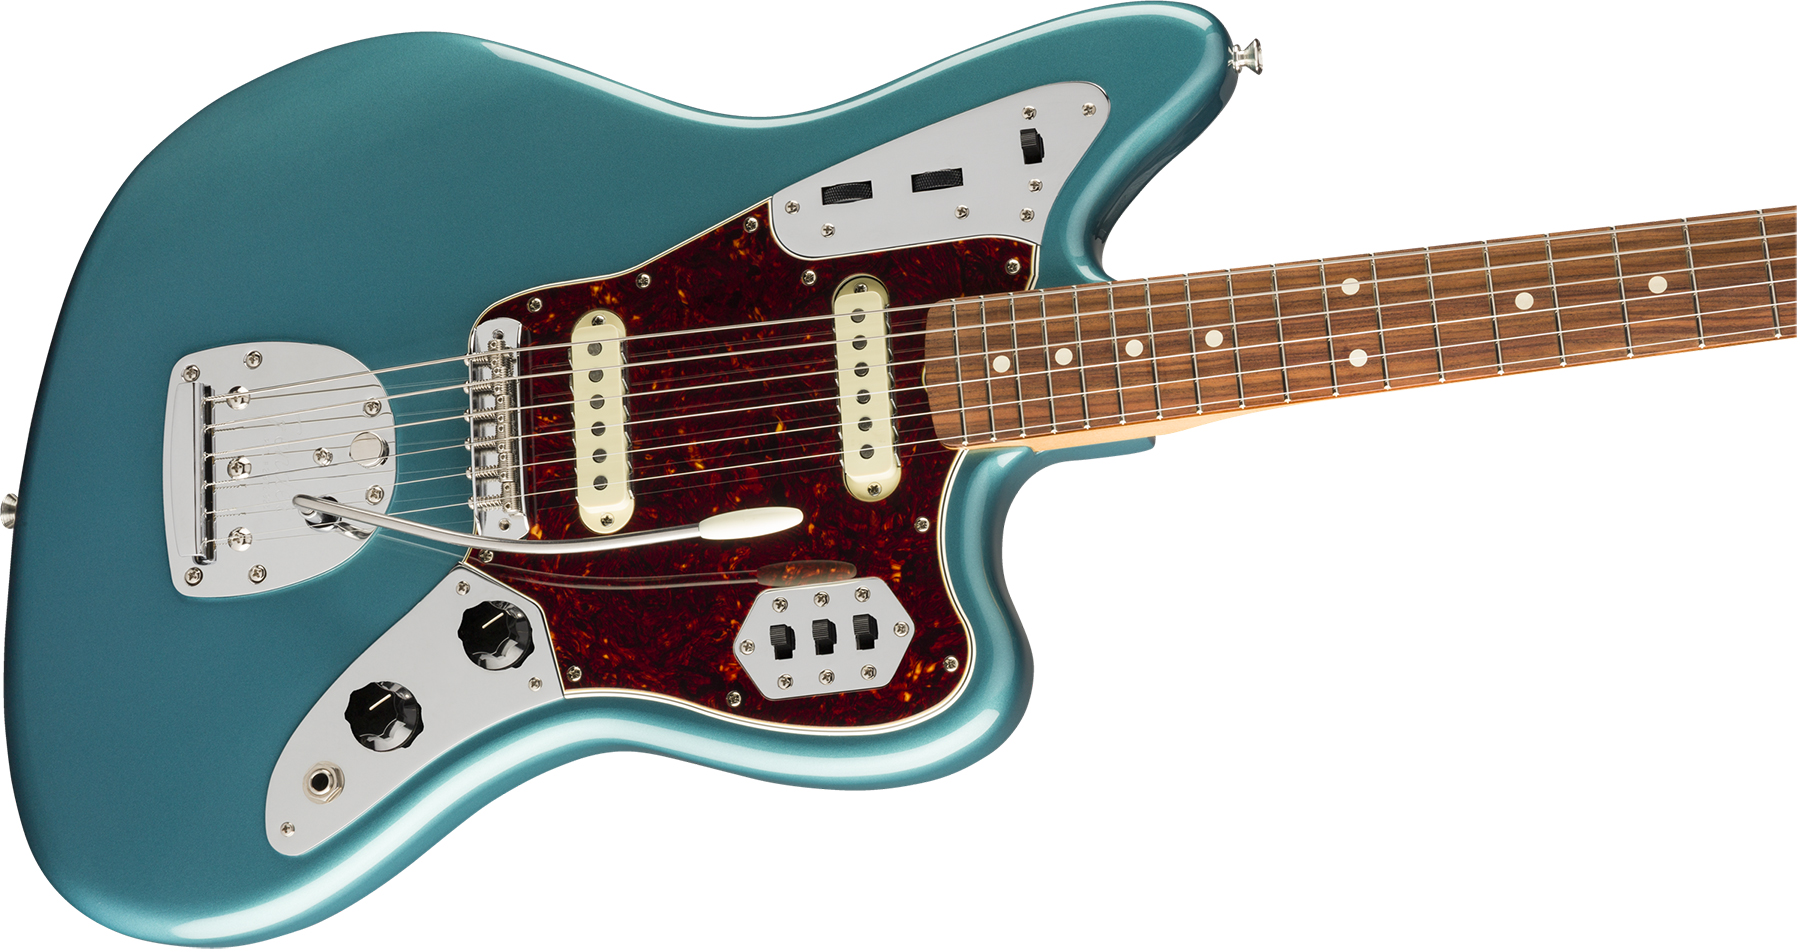 Fender Jaguar 60s Vintera Vintage Mex Pf - Ocean Turquoise - Retro rock electric guitar - Variation 2